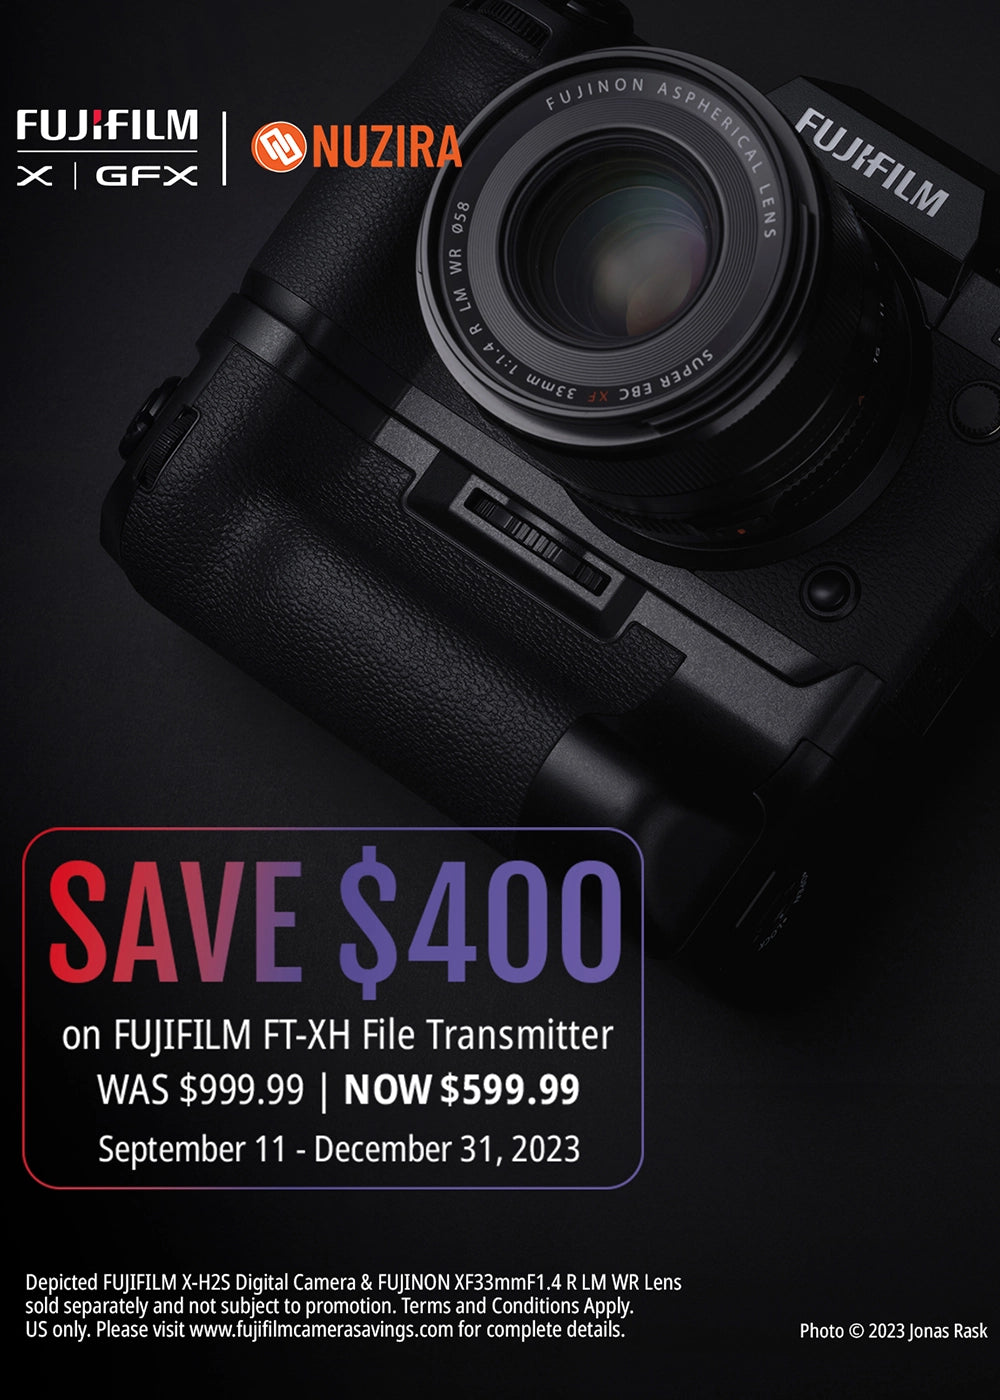 Fujifilm FT XH Save $400